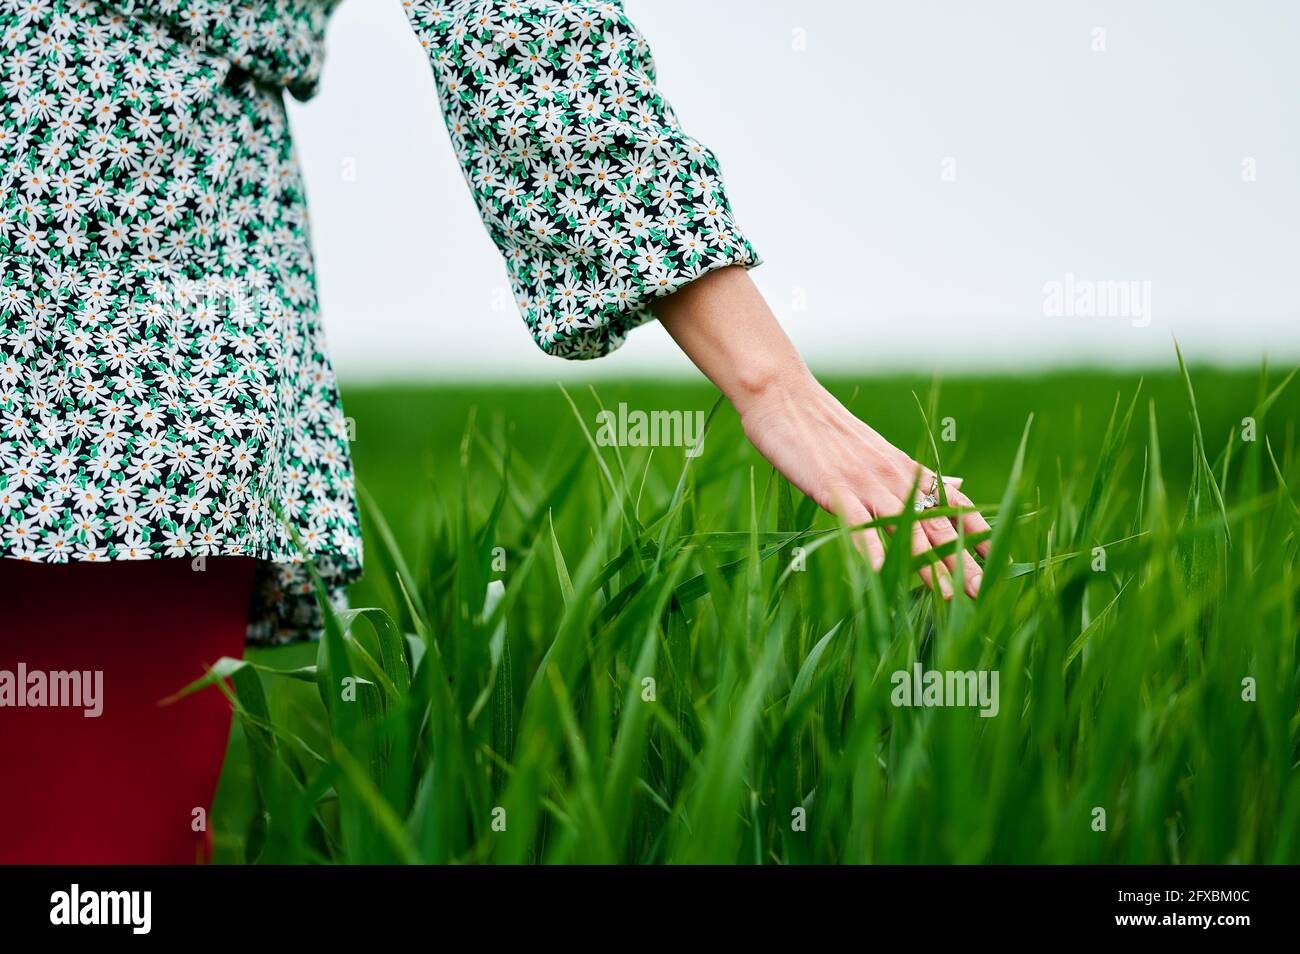 touching grass.